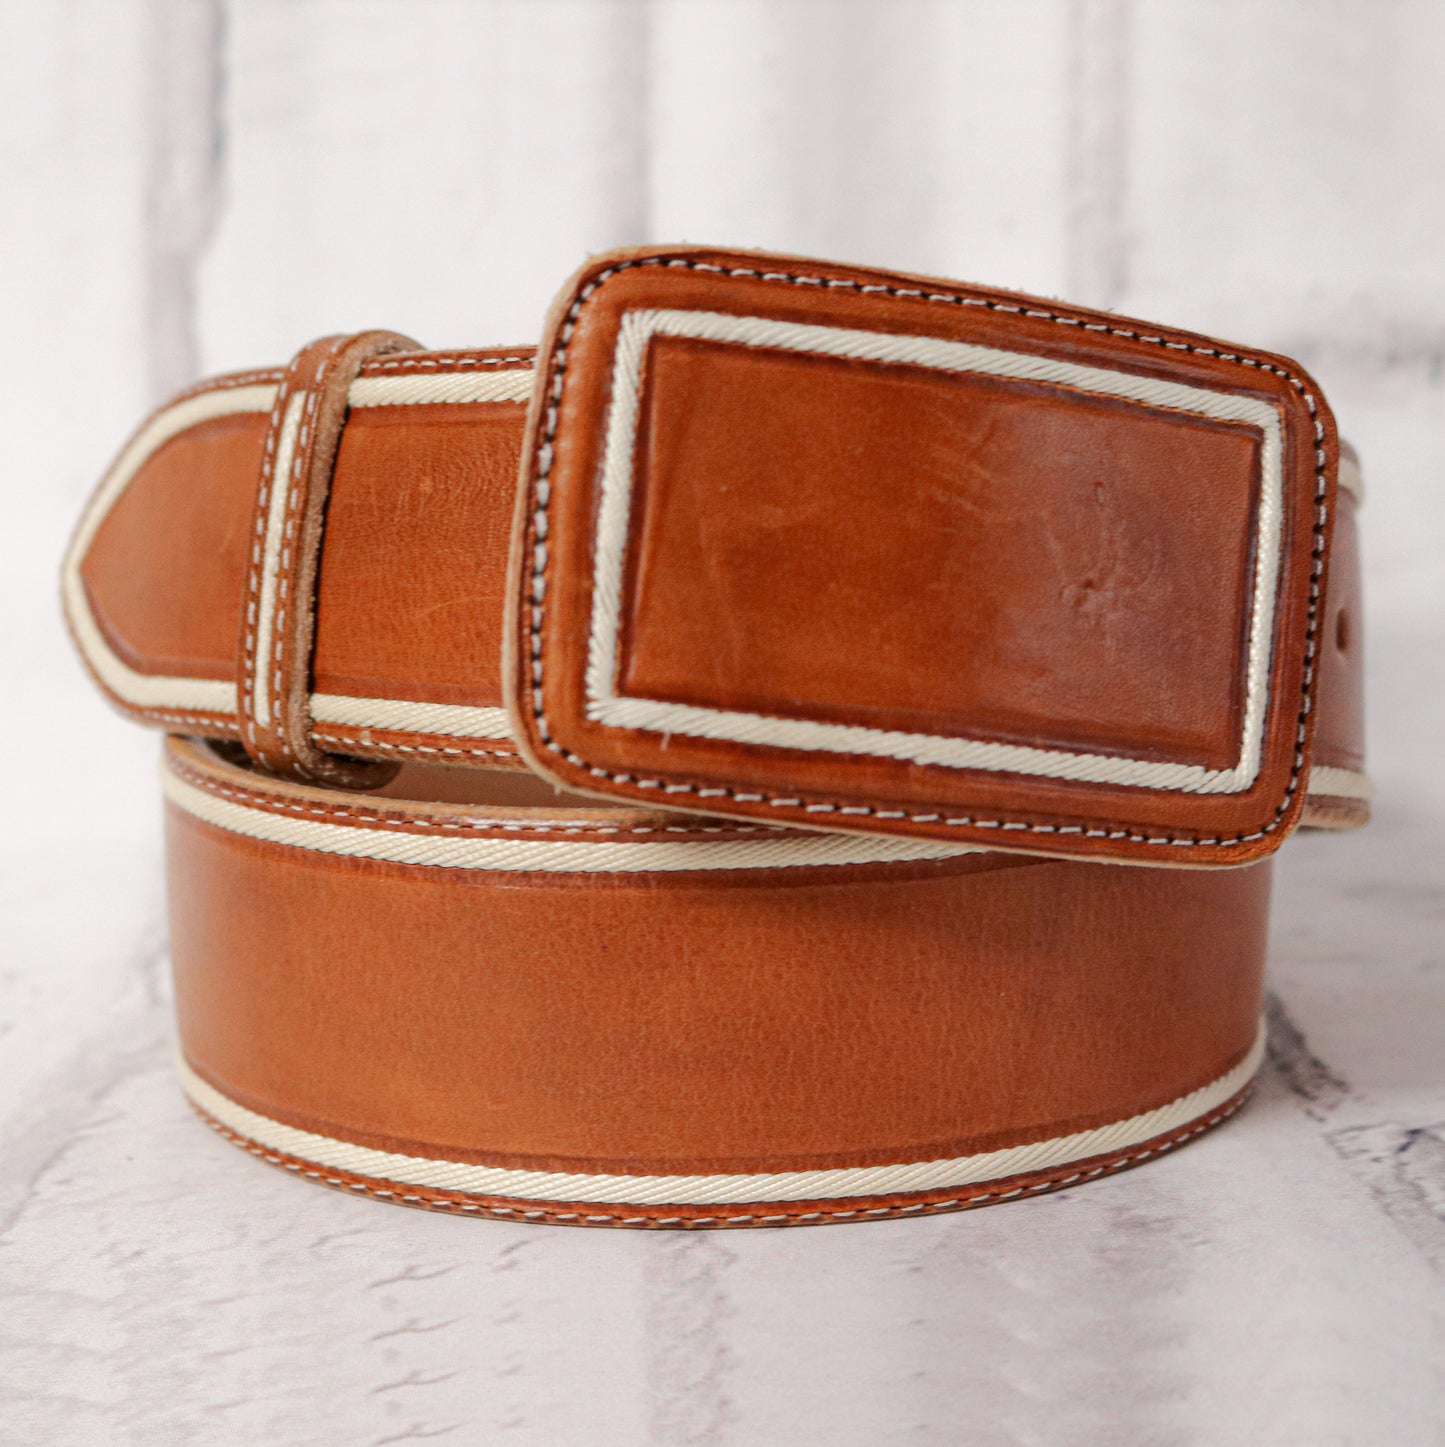 Miel Cinto Piteado Charro Mexican Leather Belt